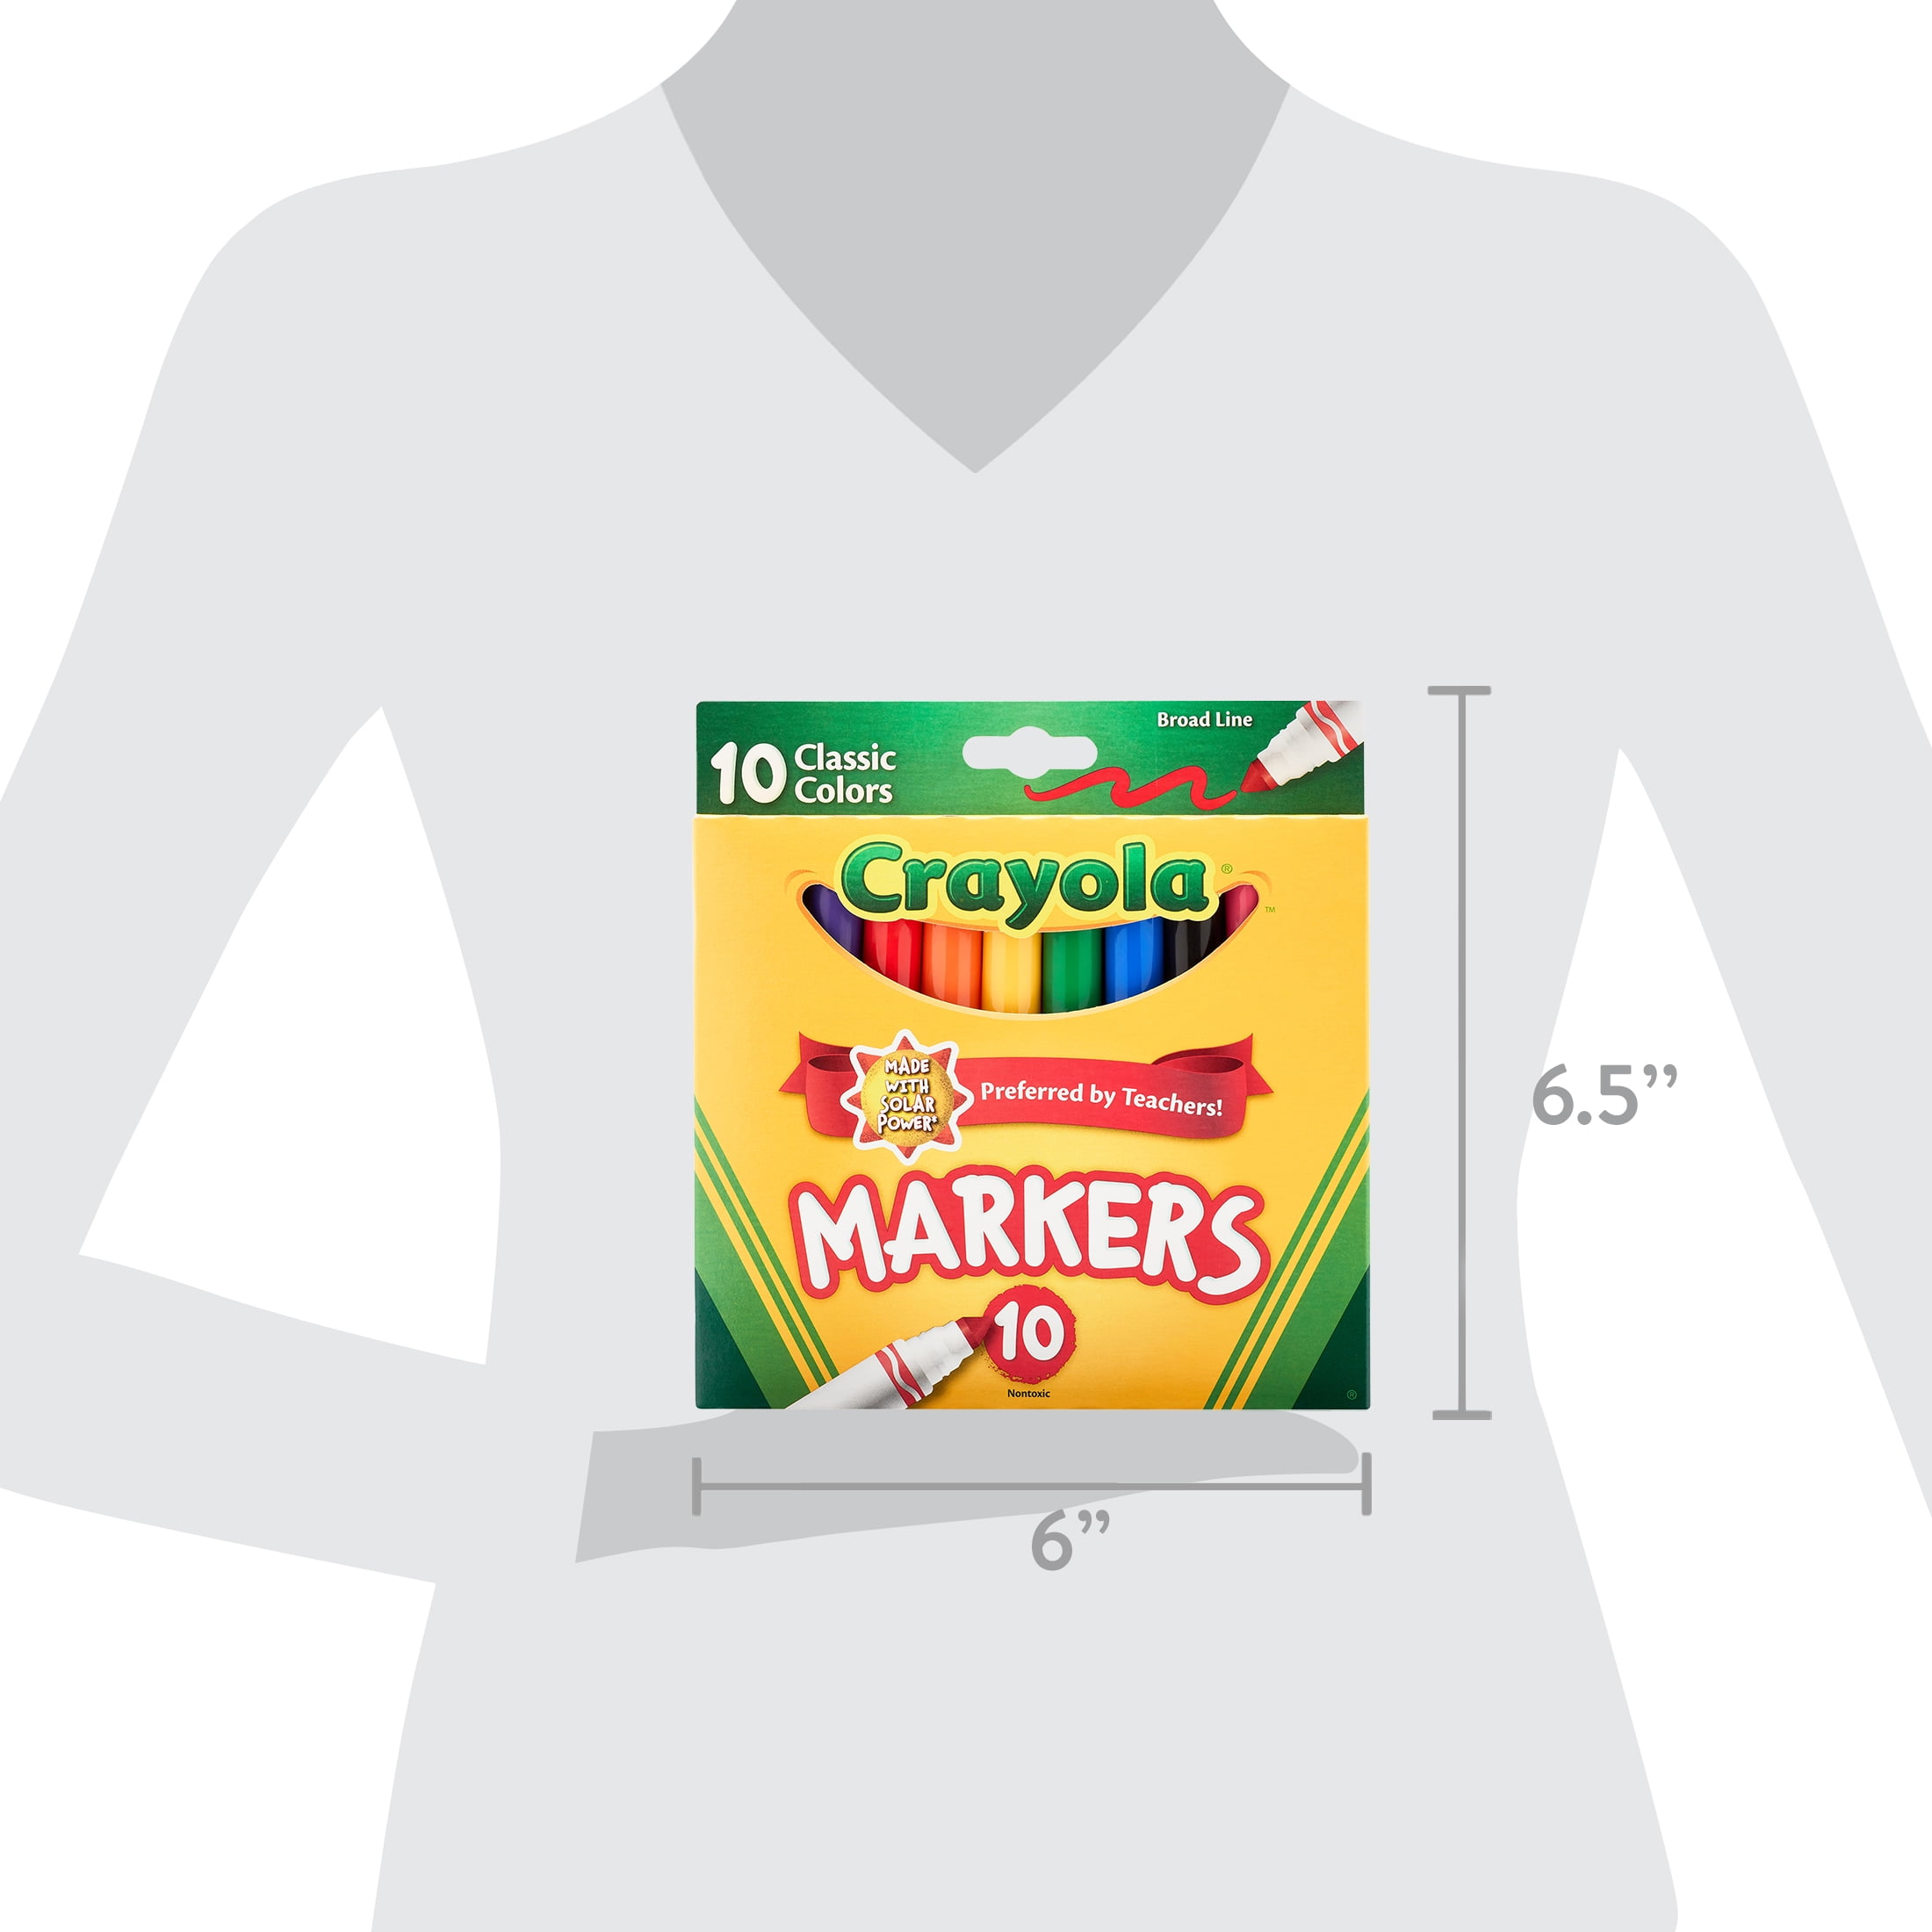  Crayola Broad Line Markers 10ct : Arts, Crafts & Sewing